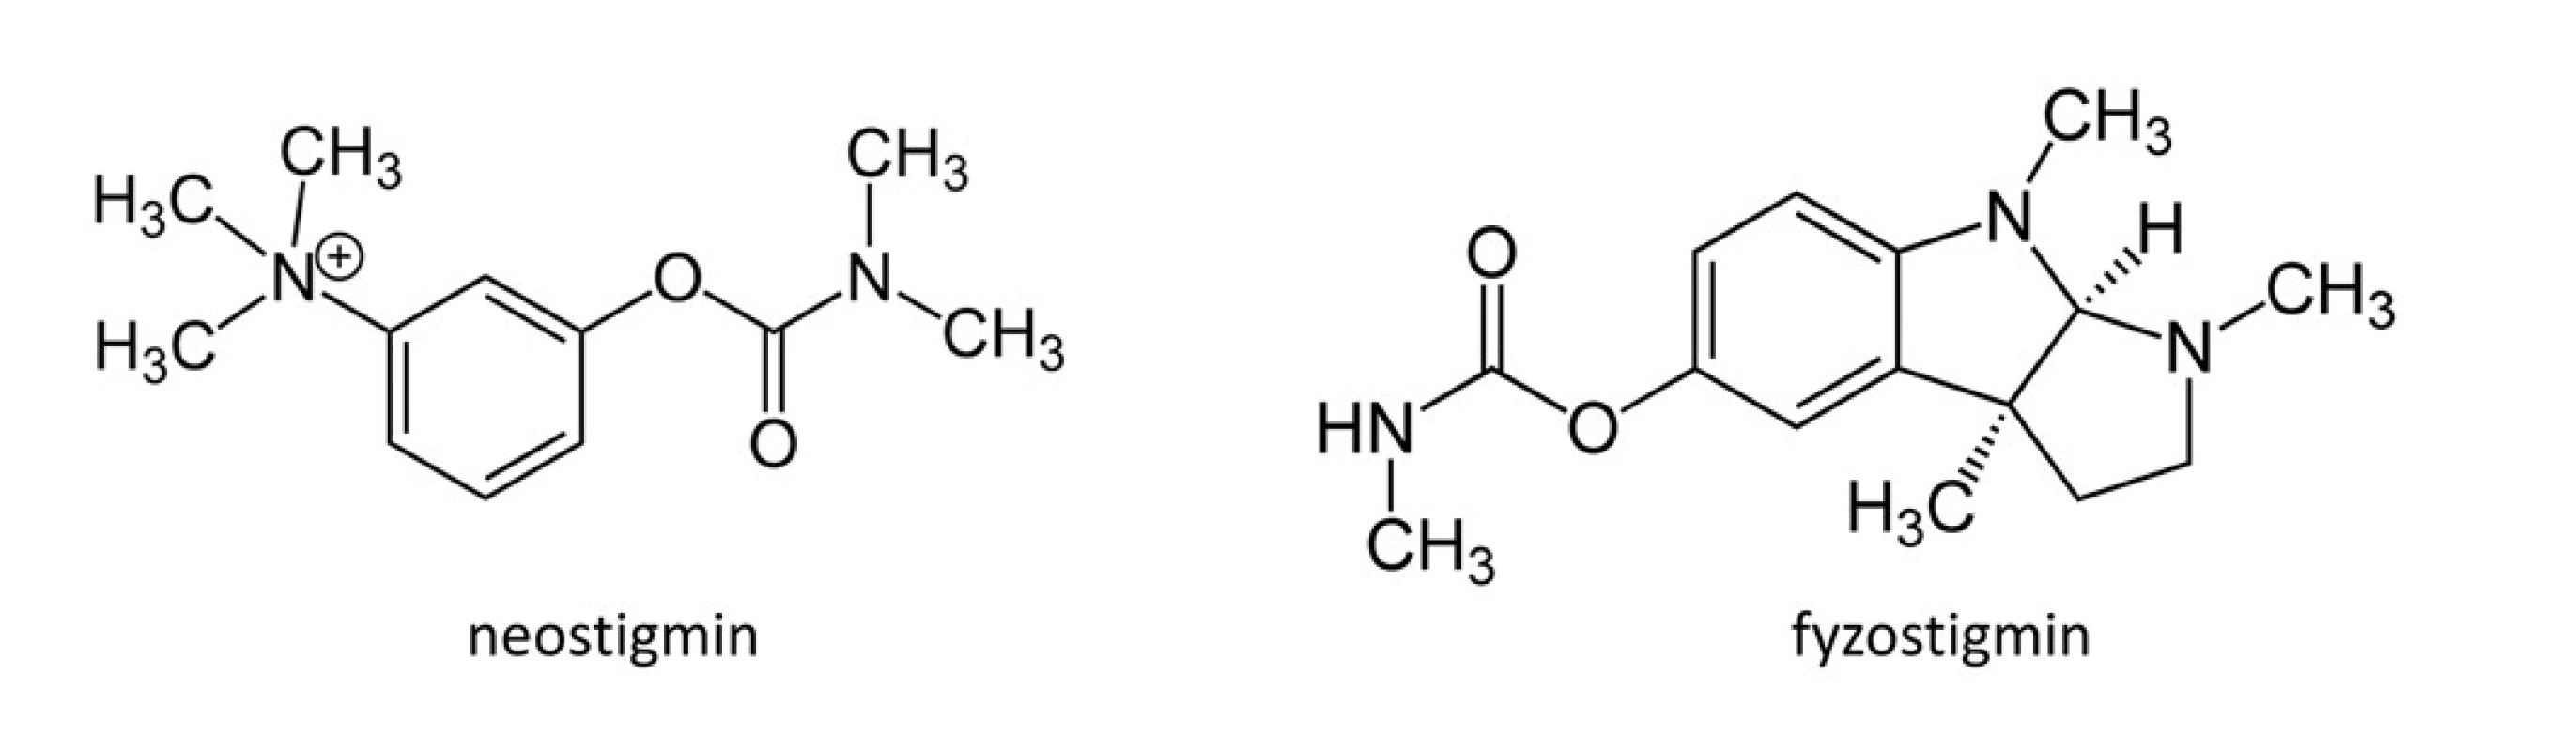 Chemické vzorce neostigminu a fyzostigminu. Zdroj: Wikimedia Commons (CC BY 4.0)